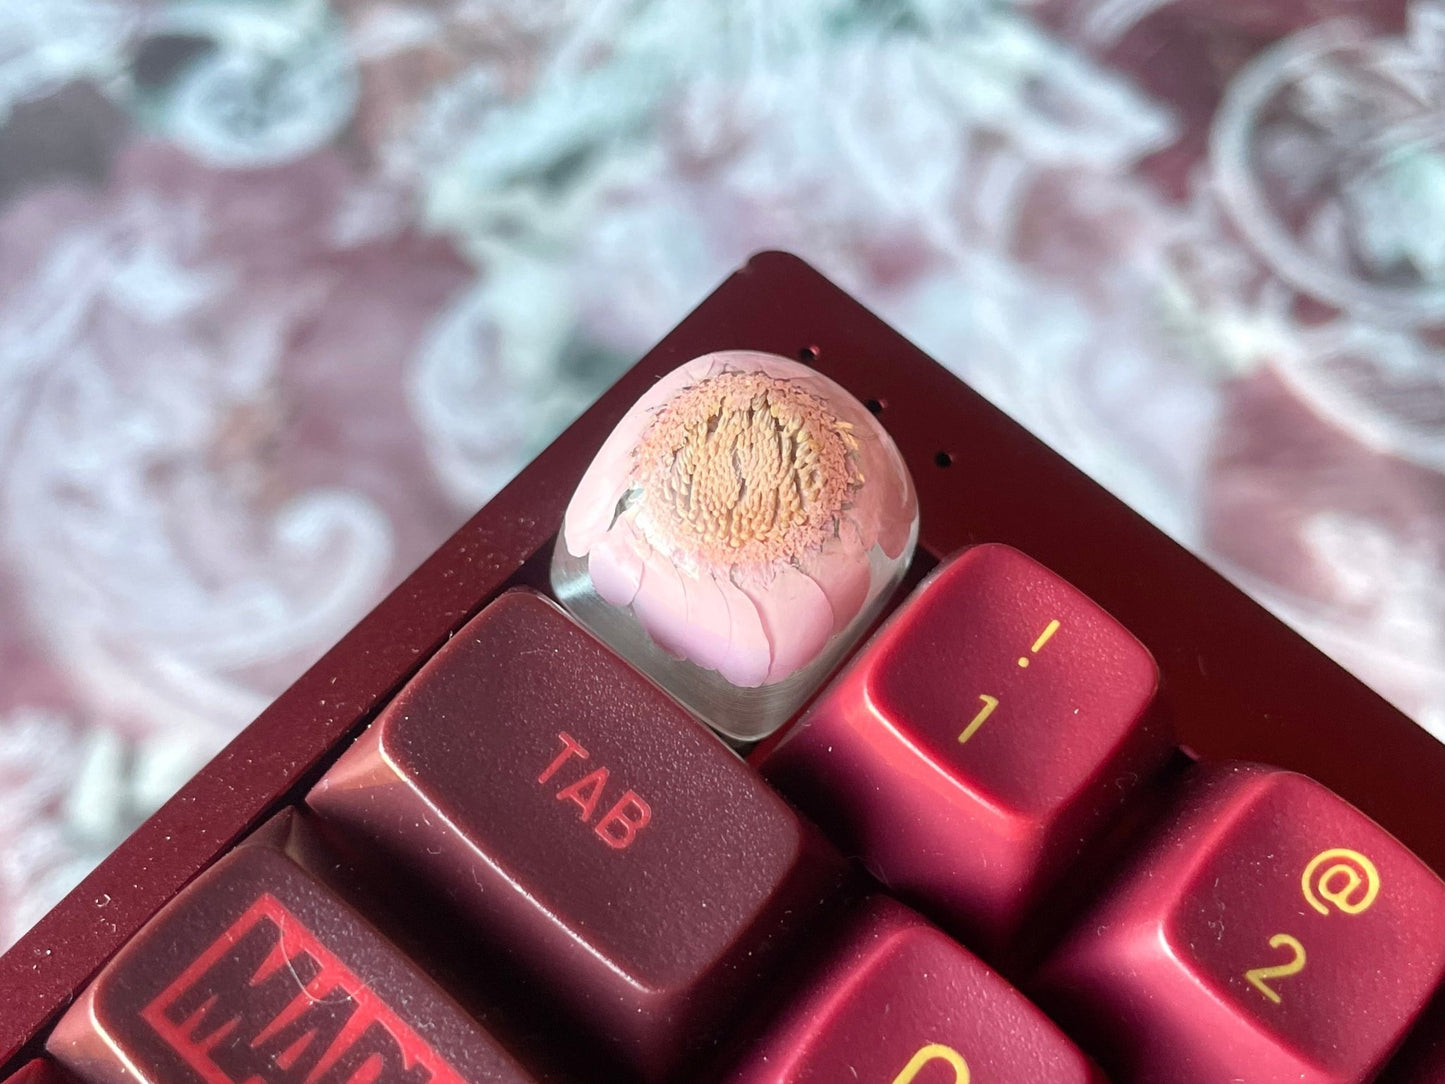 Pink Resin Pressed Flower Keycap - DOM Profile - Kayden's Keycaps